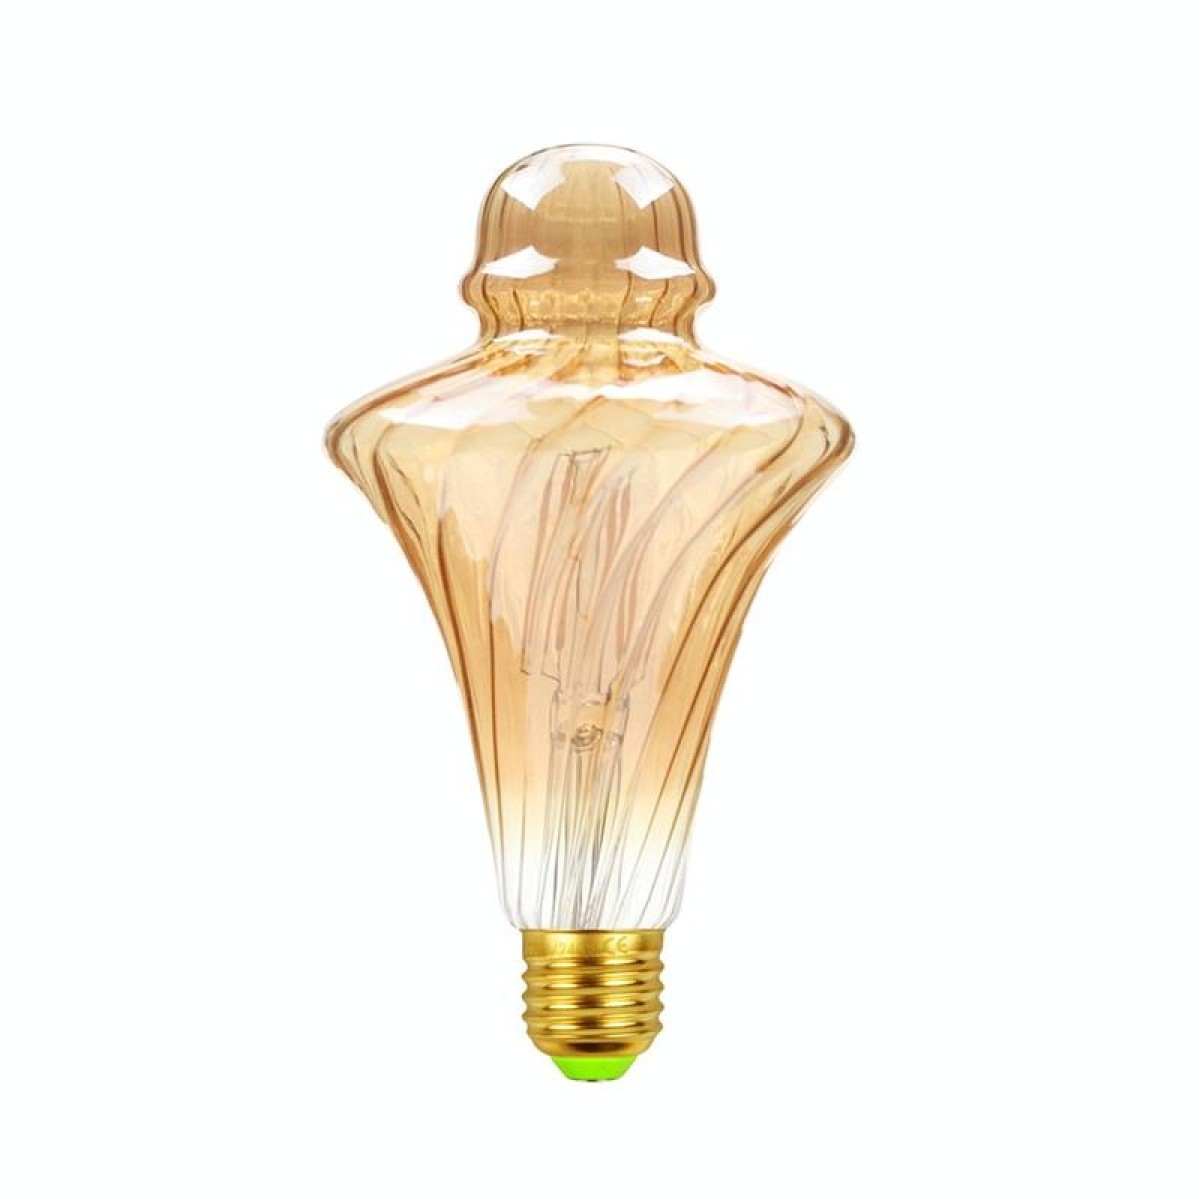 E27 Screw Port LED Vintage Light Shaped Decorative Illumination Bulb, Style: Straw Hat Gold(110V 4W 2700K)